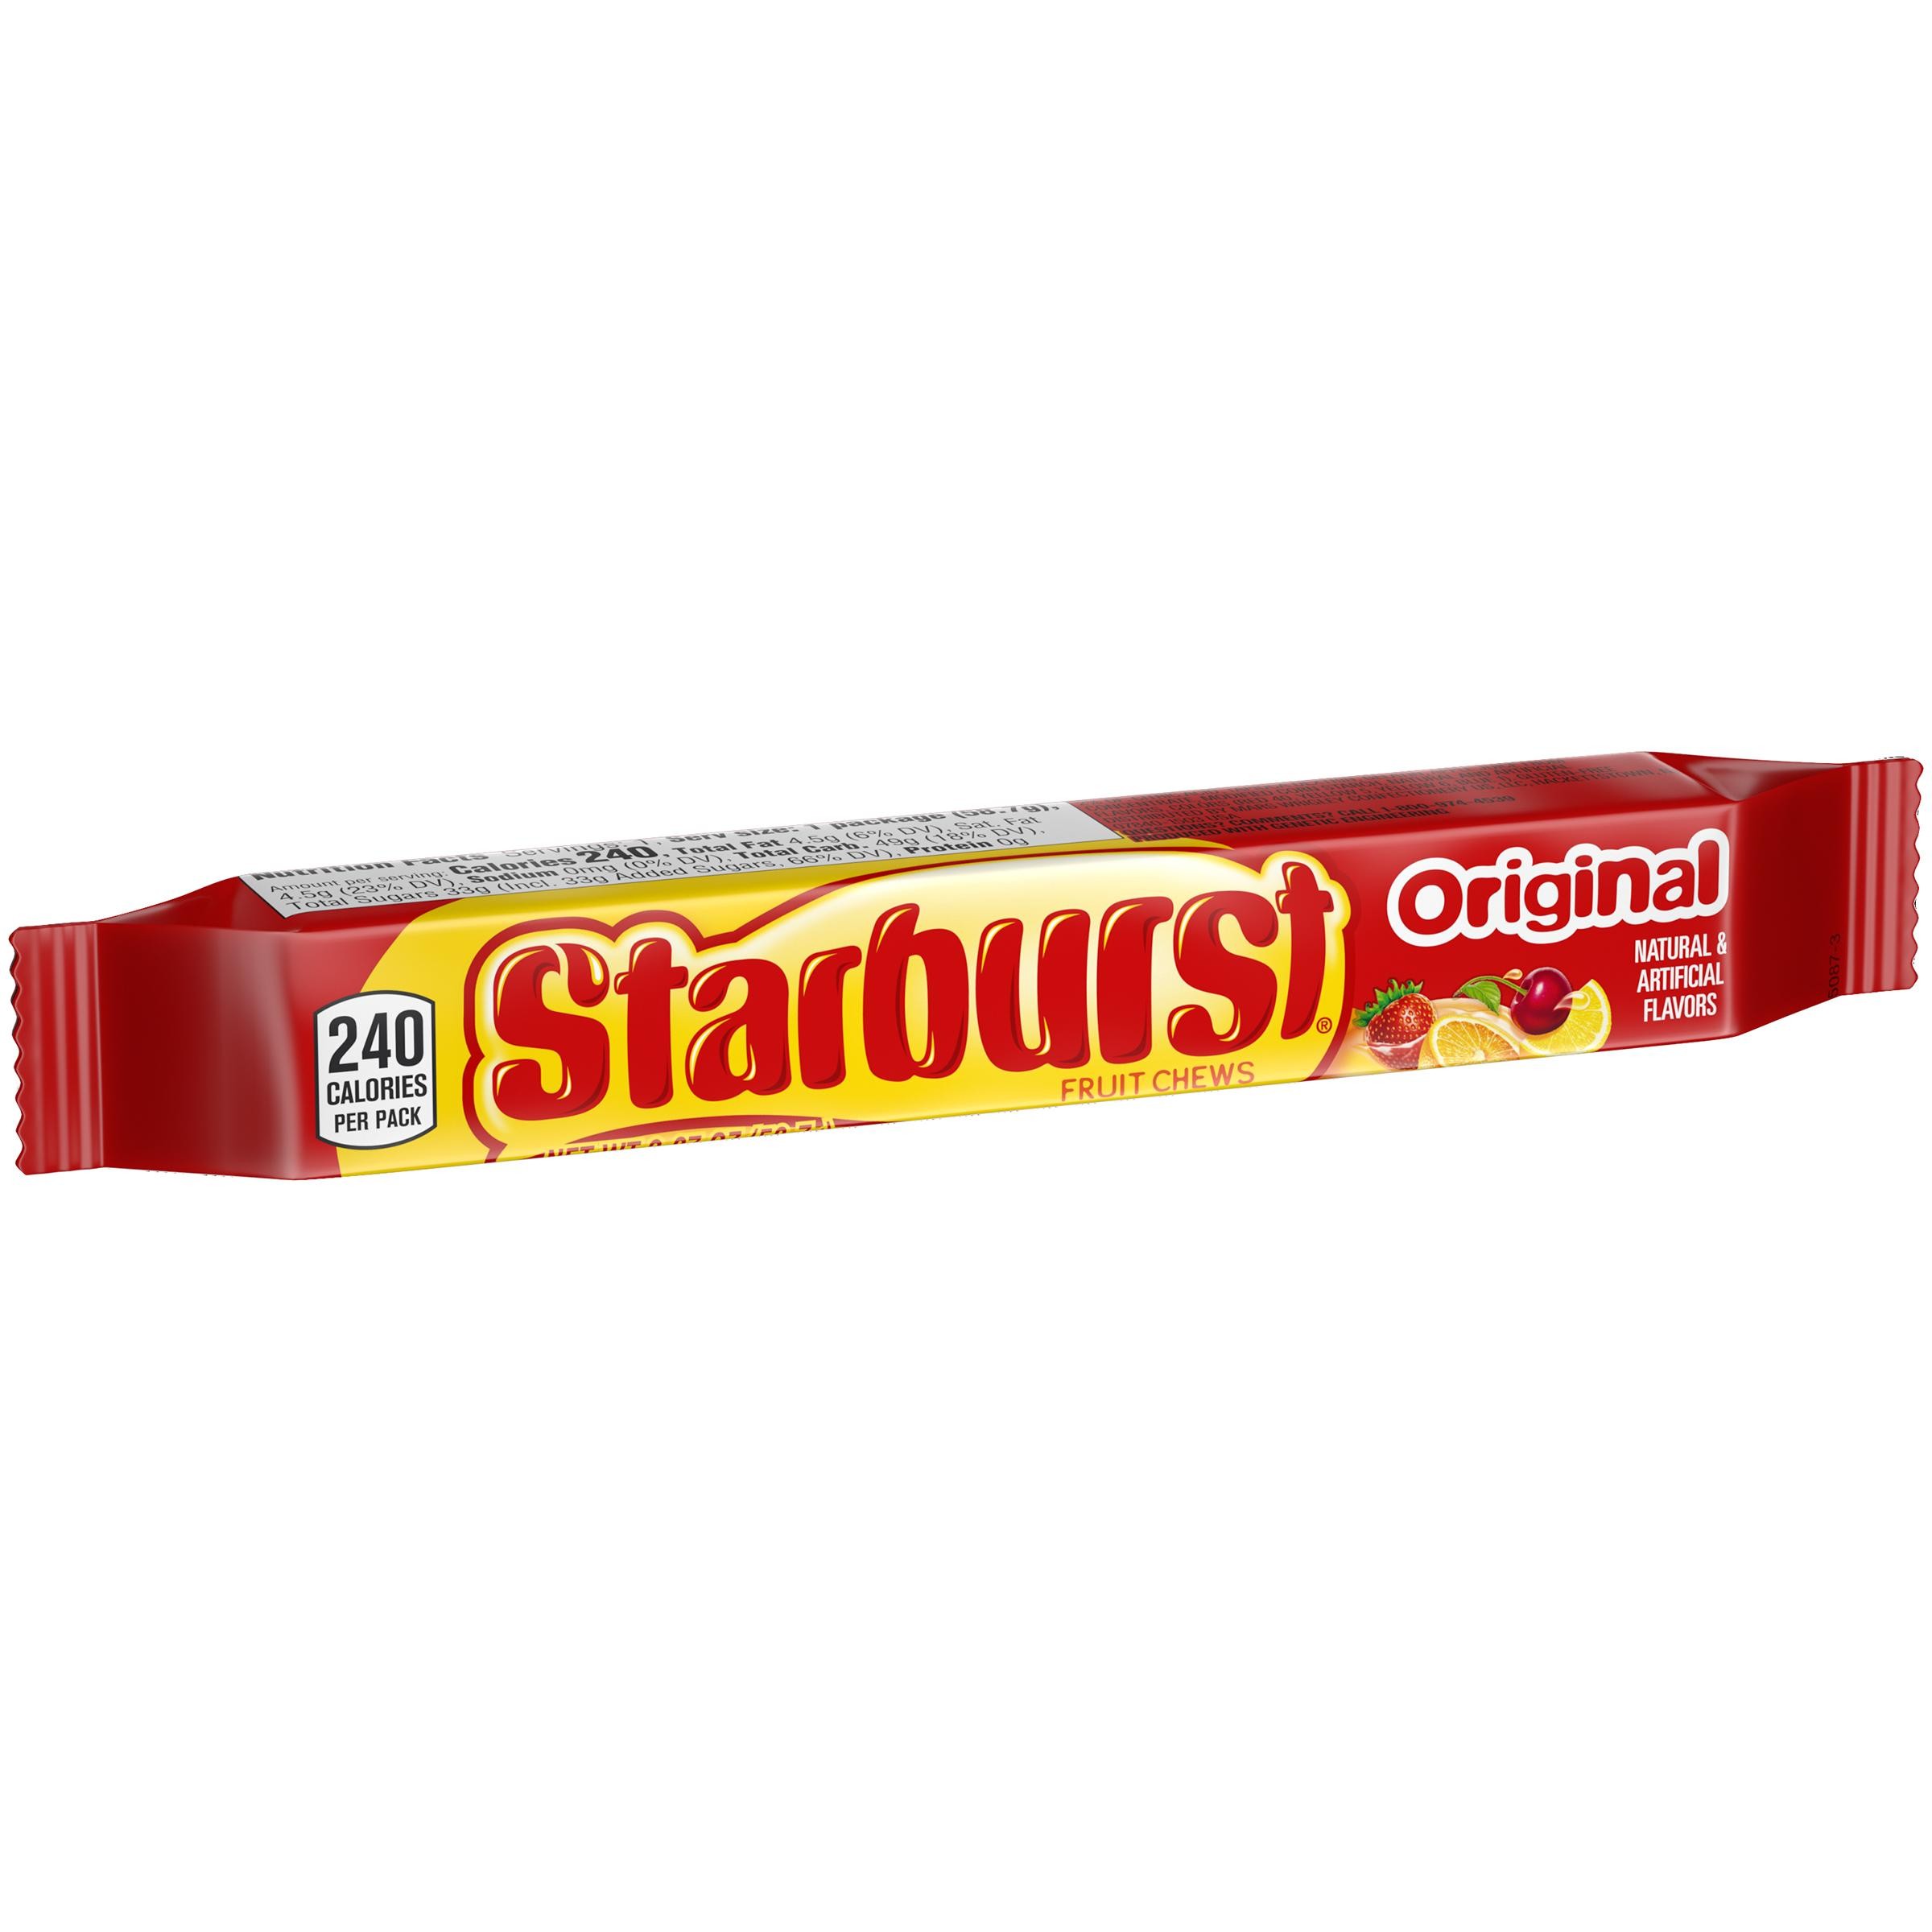 Starburst Original Fruit Chews 2.07 oz